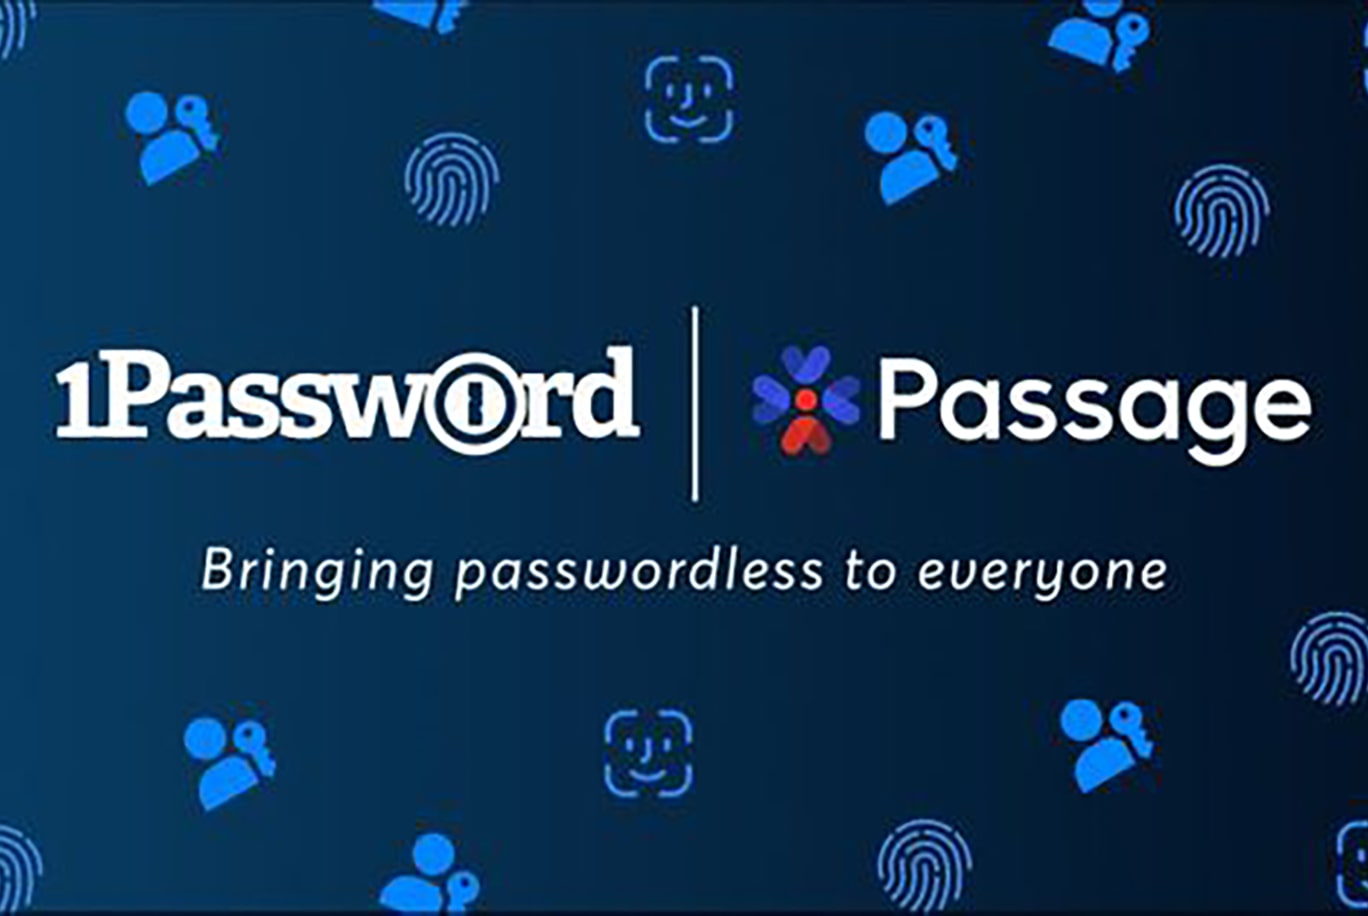 1Password Acquires Passage Identity to Power a Passwordless Future